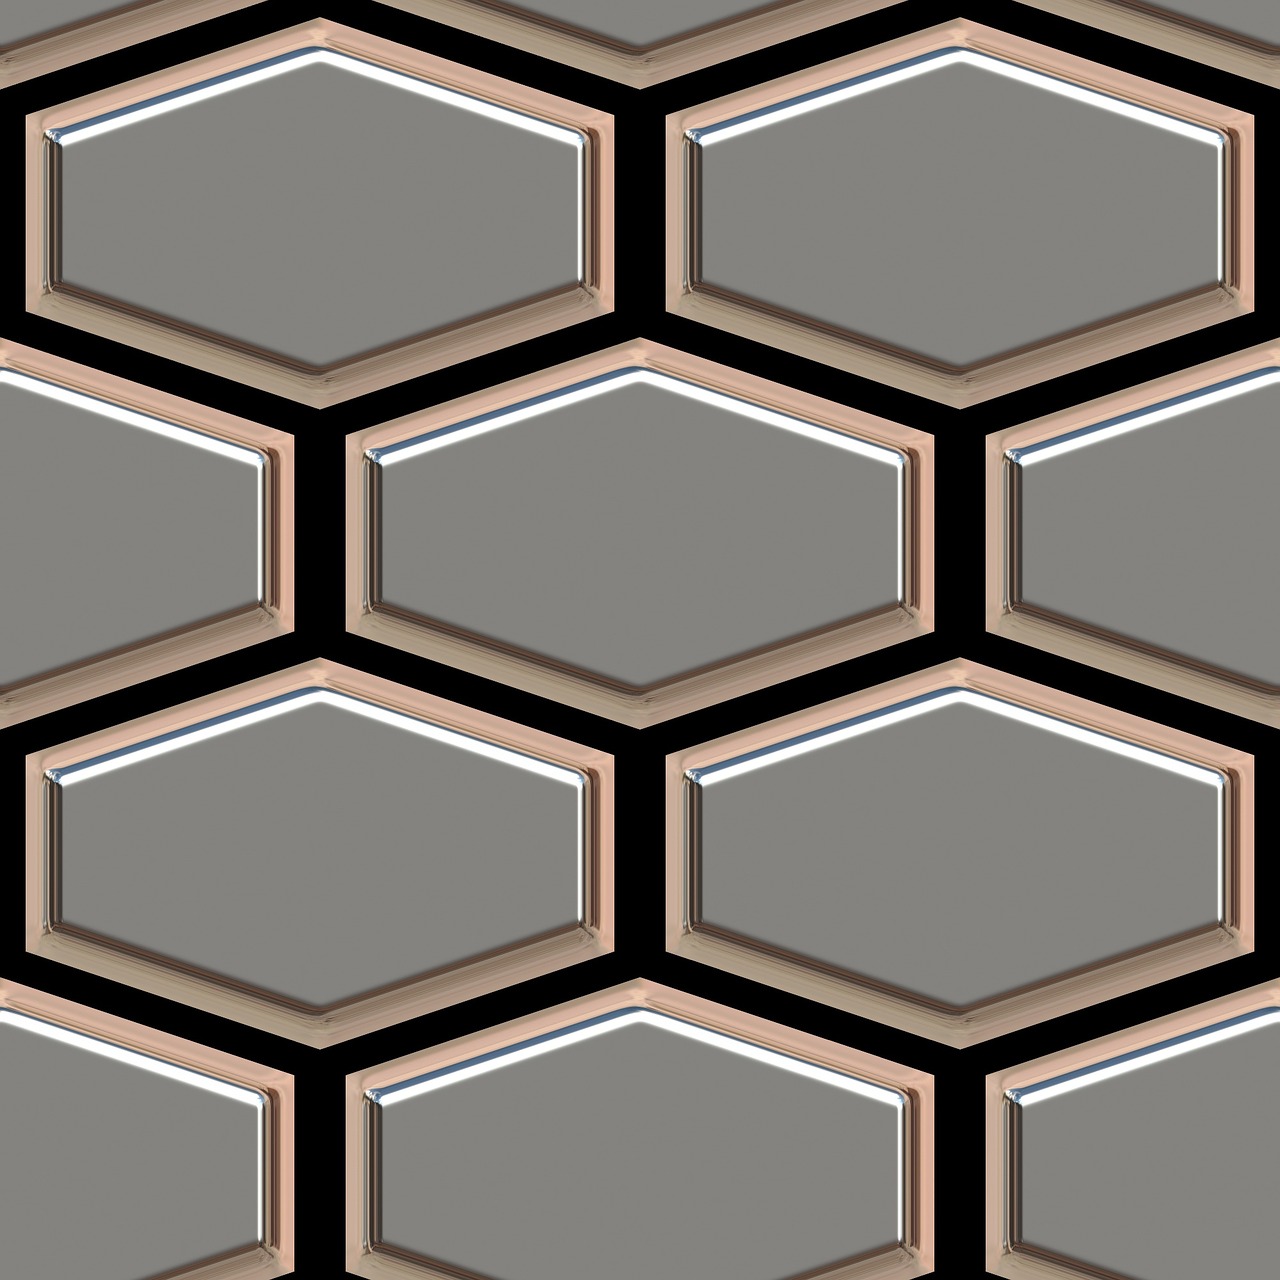 hexagon grid pattern free photo